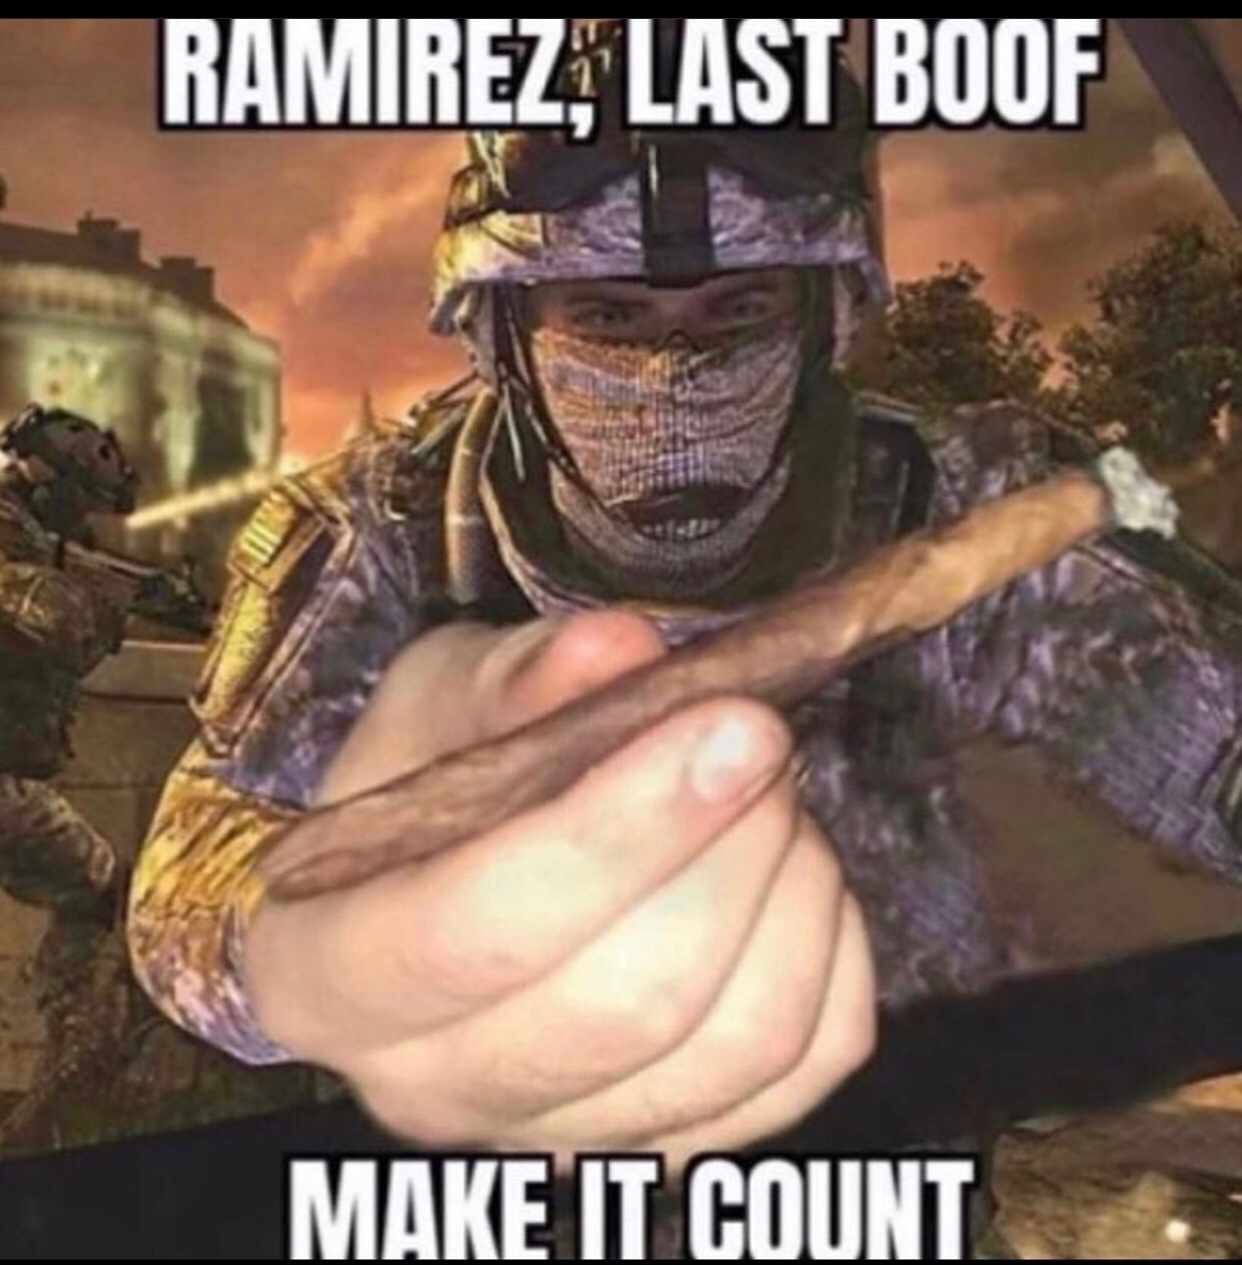 RAMIREZ! pass the boof - meme